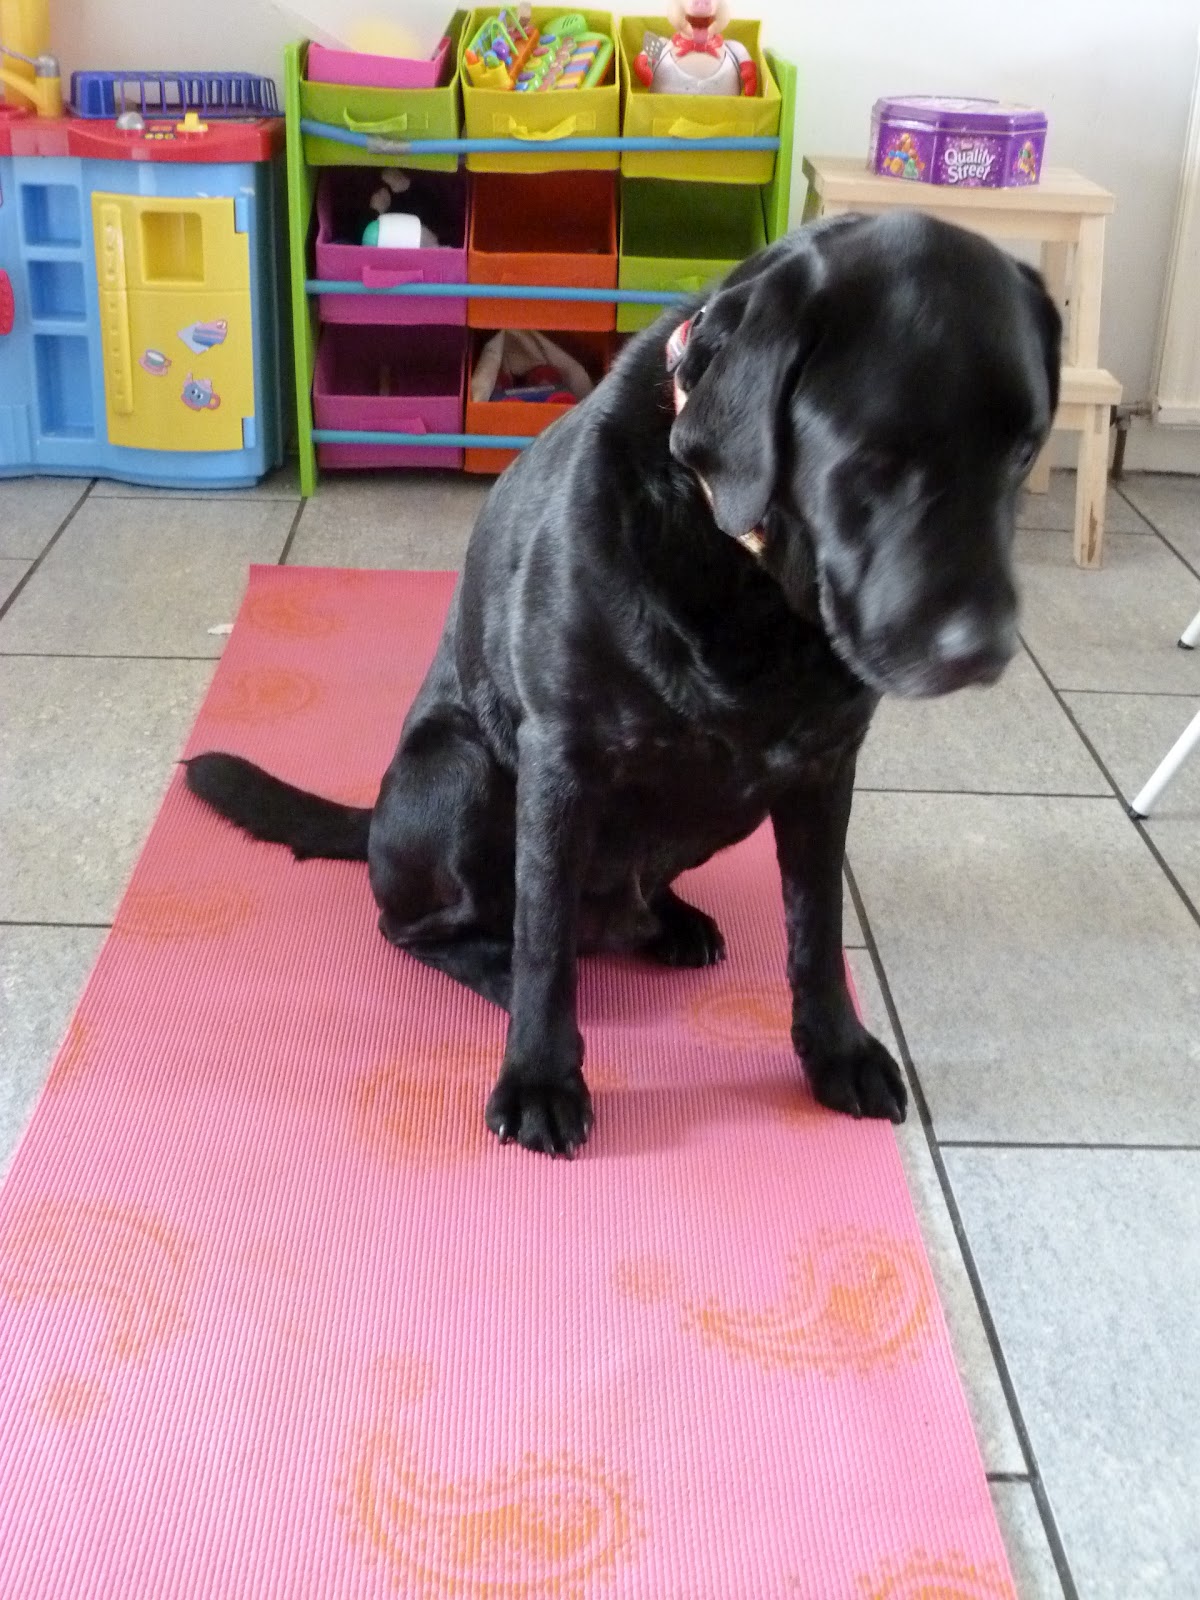 Dog on a yoga mat